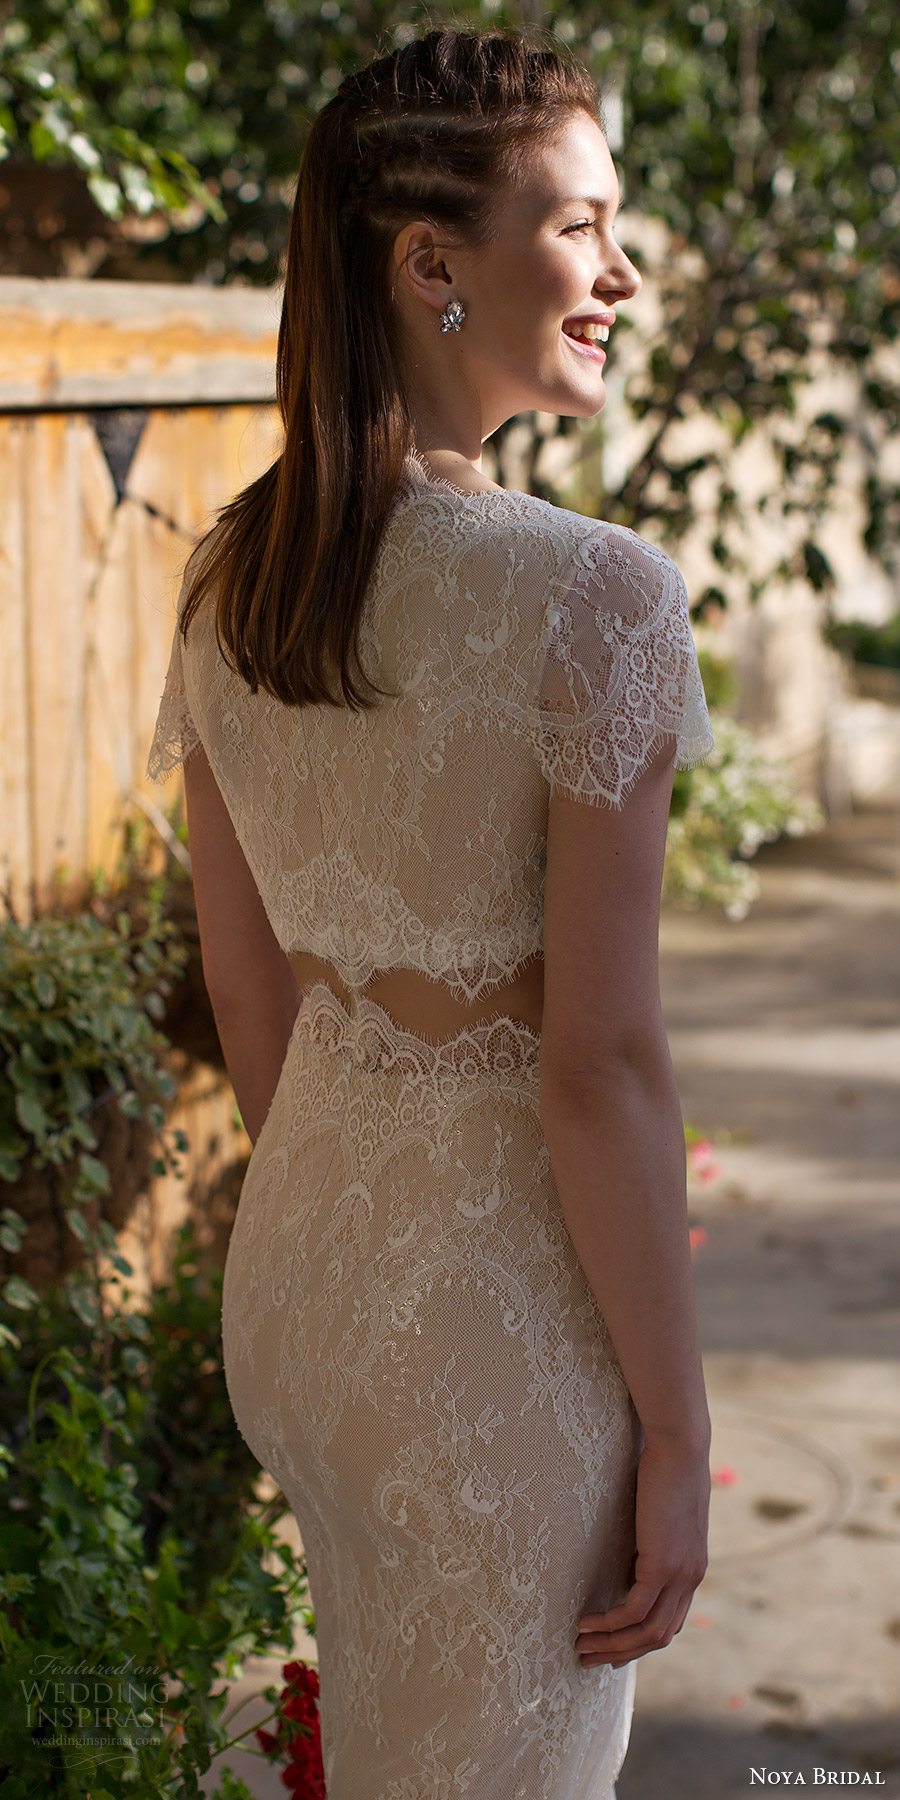 noya bridal 2016 short sleeves jewel neck sheath lace wedding dress (1213) bv edgy crop top